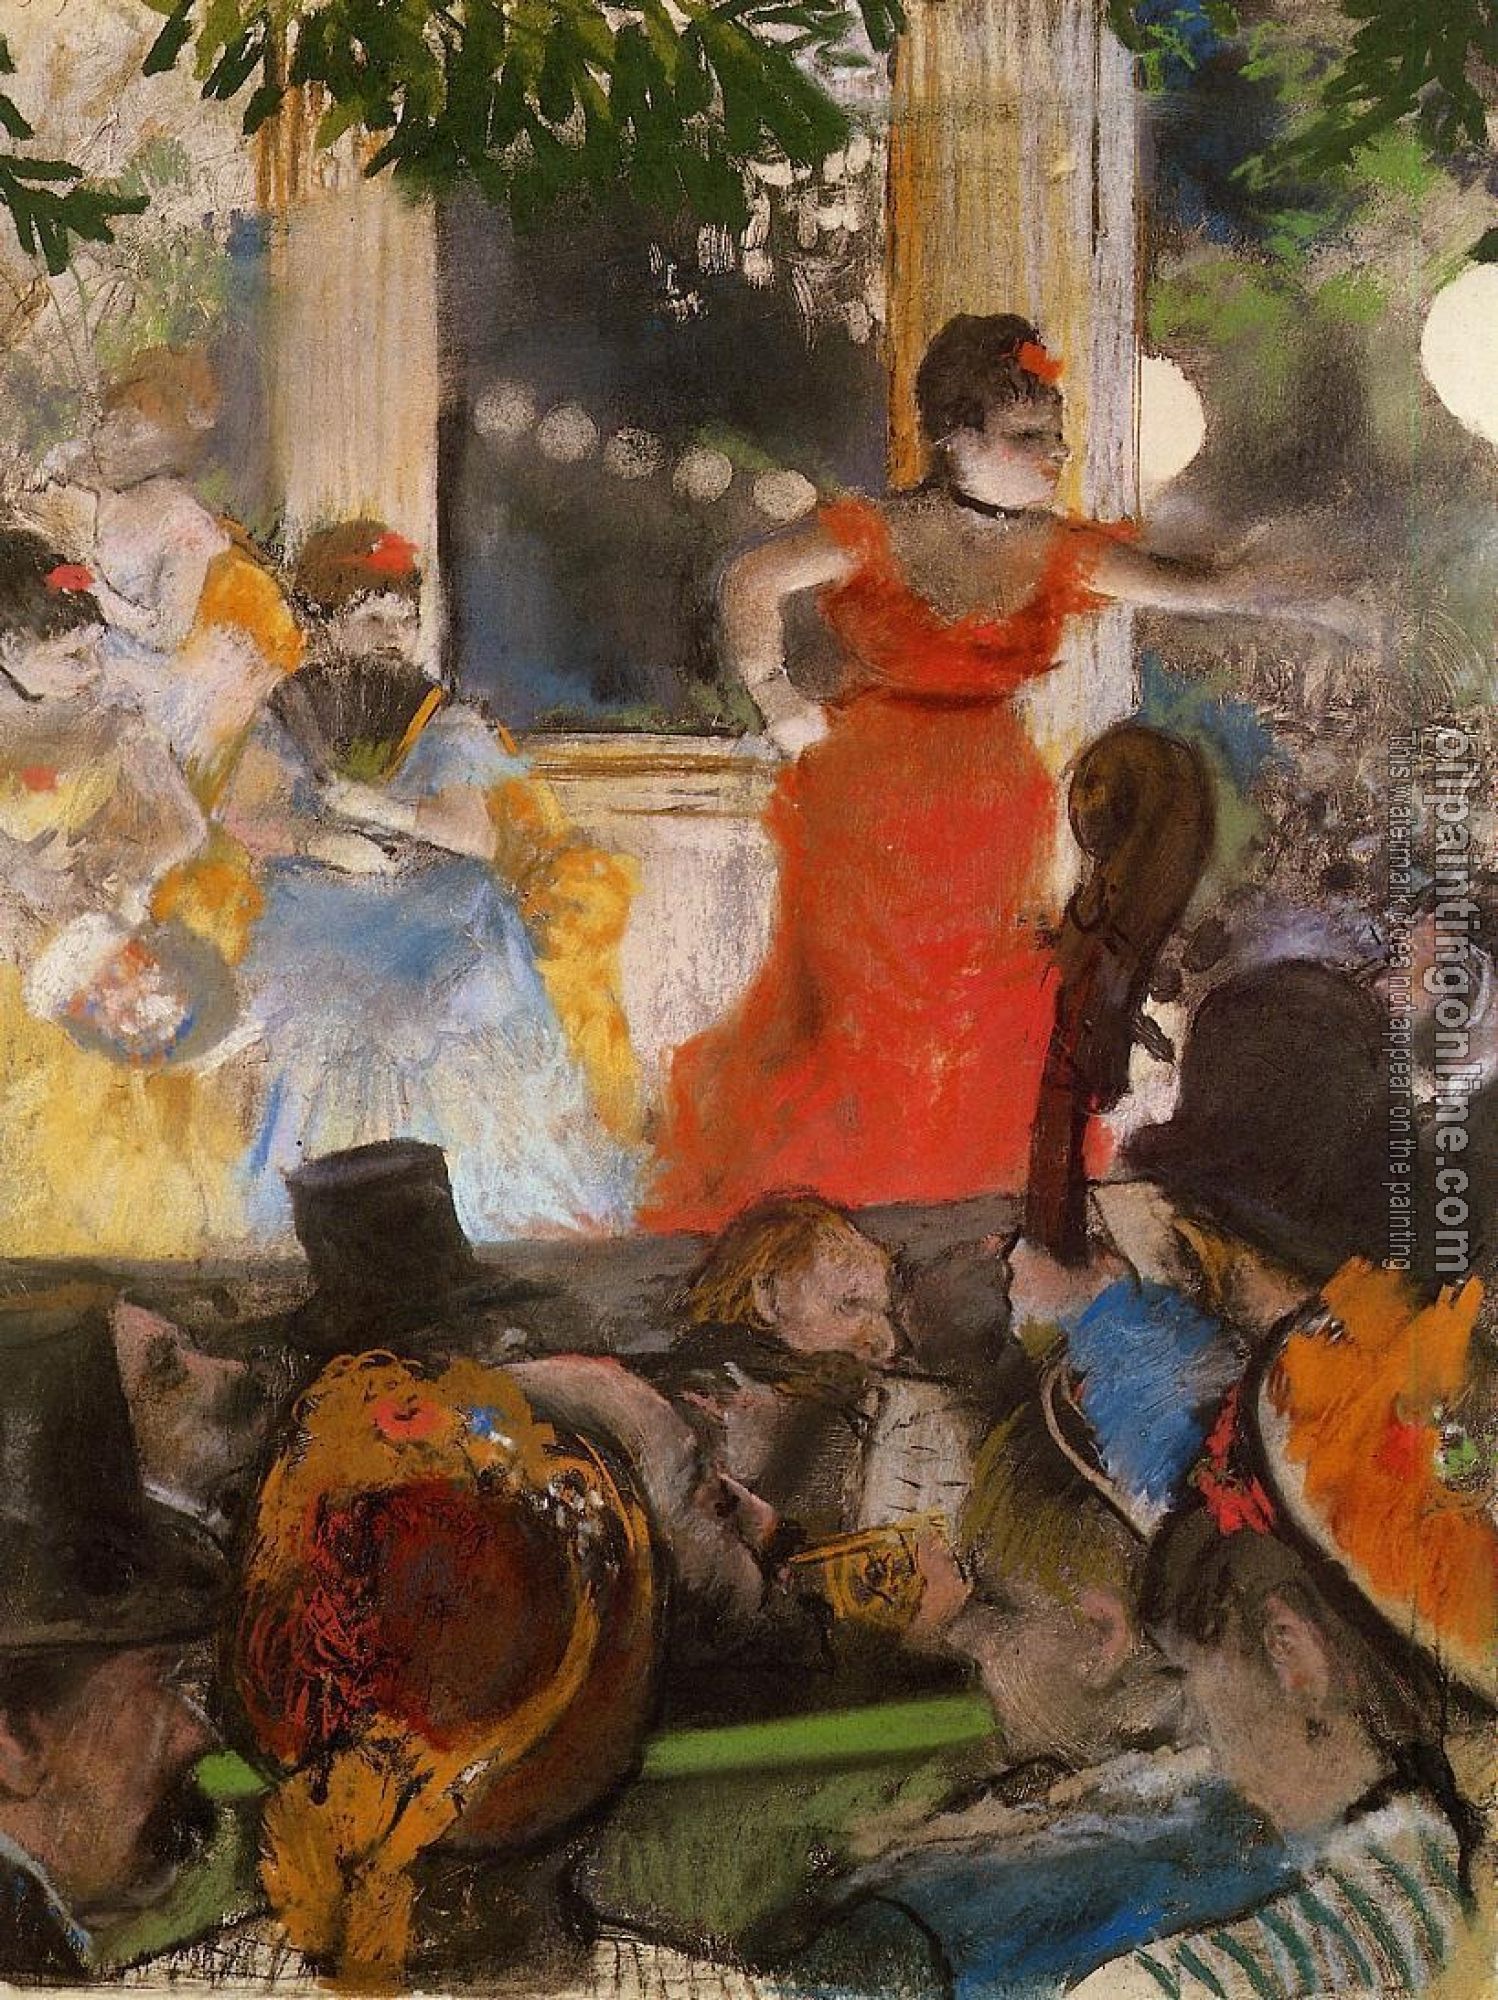 Degas, Edgar - Cafe Concert   At Les Ambassadeurs